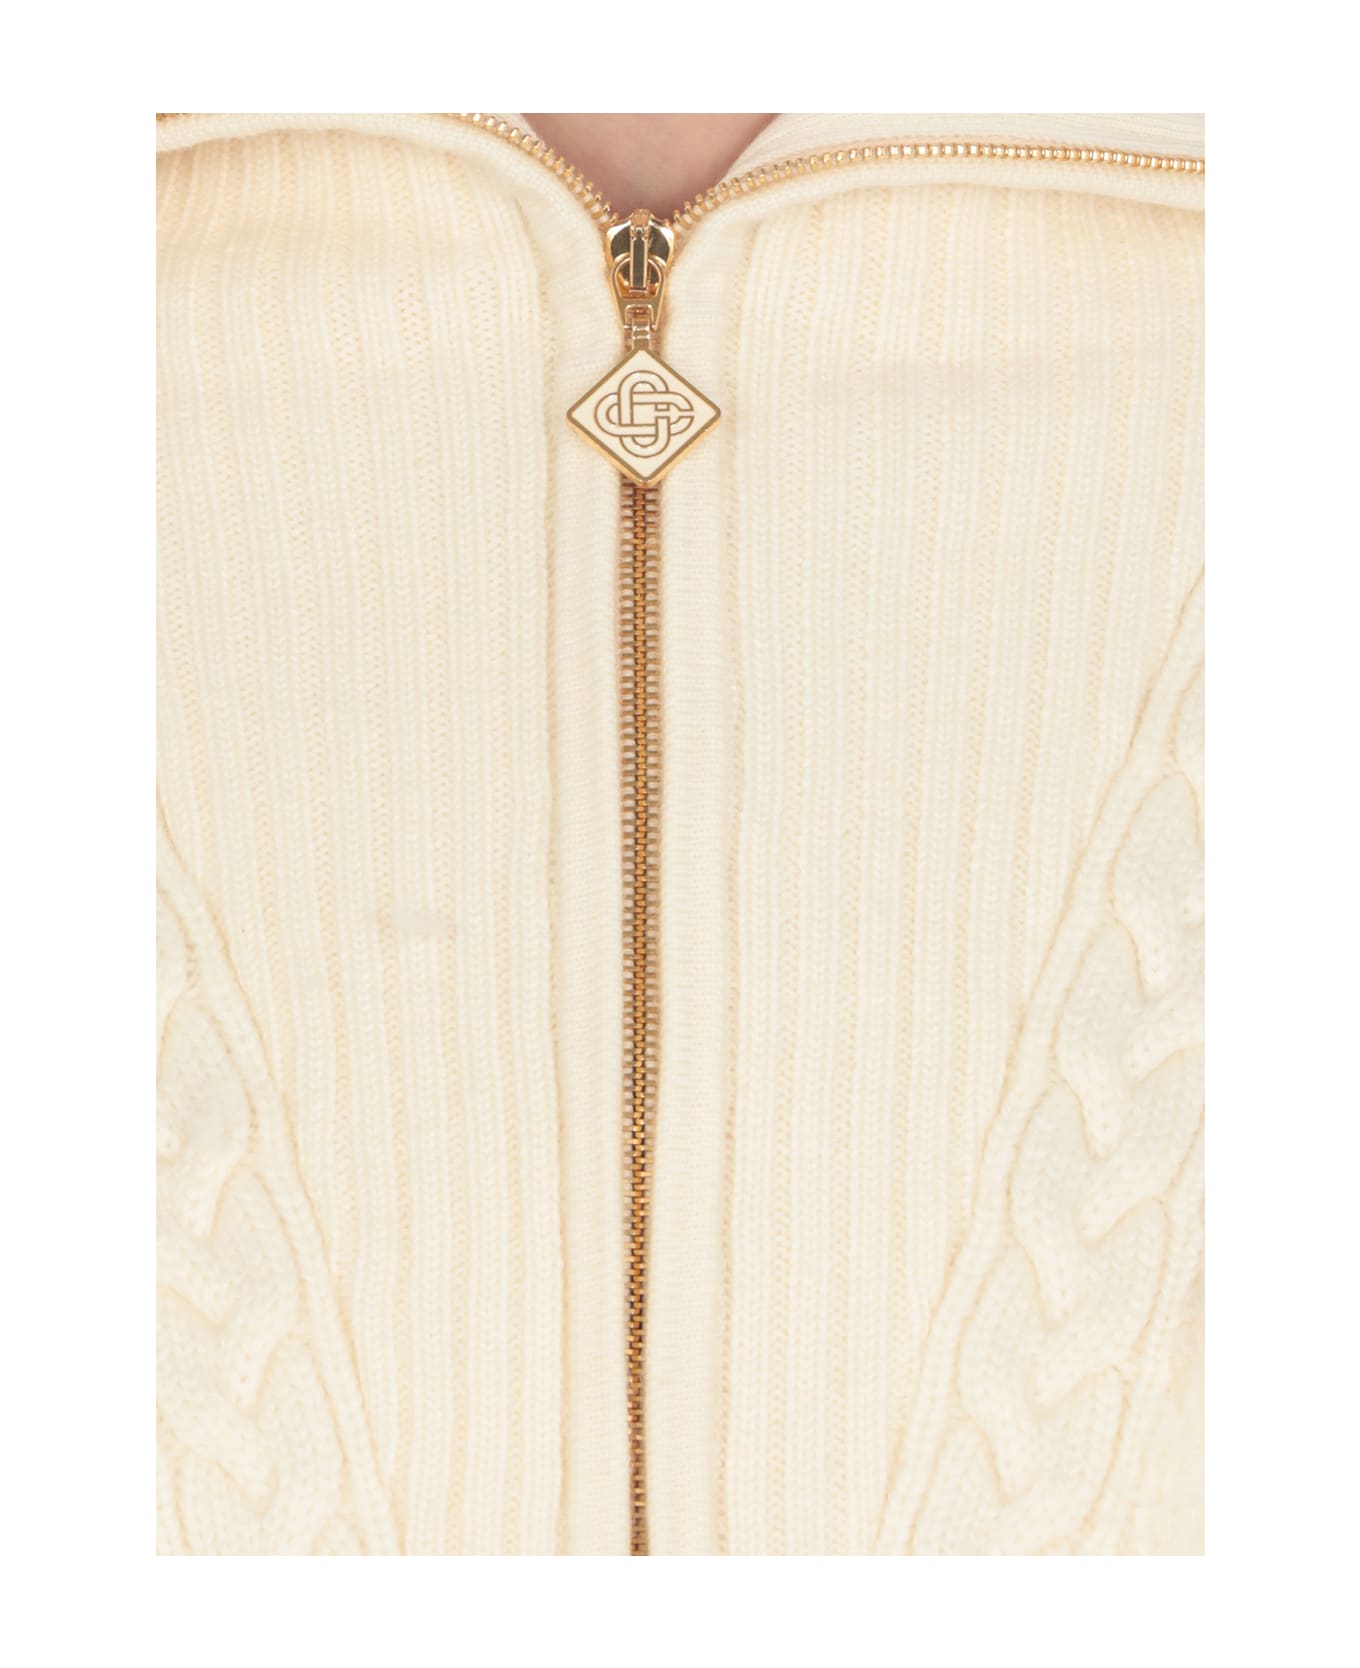 Casablanca Ivory Wool Blend Sweater - Ivory